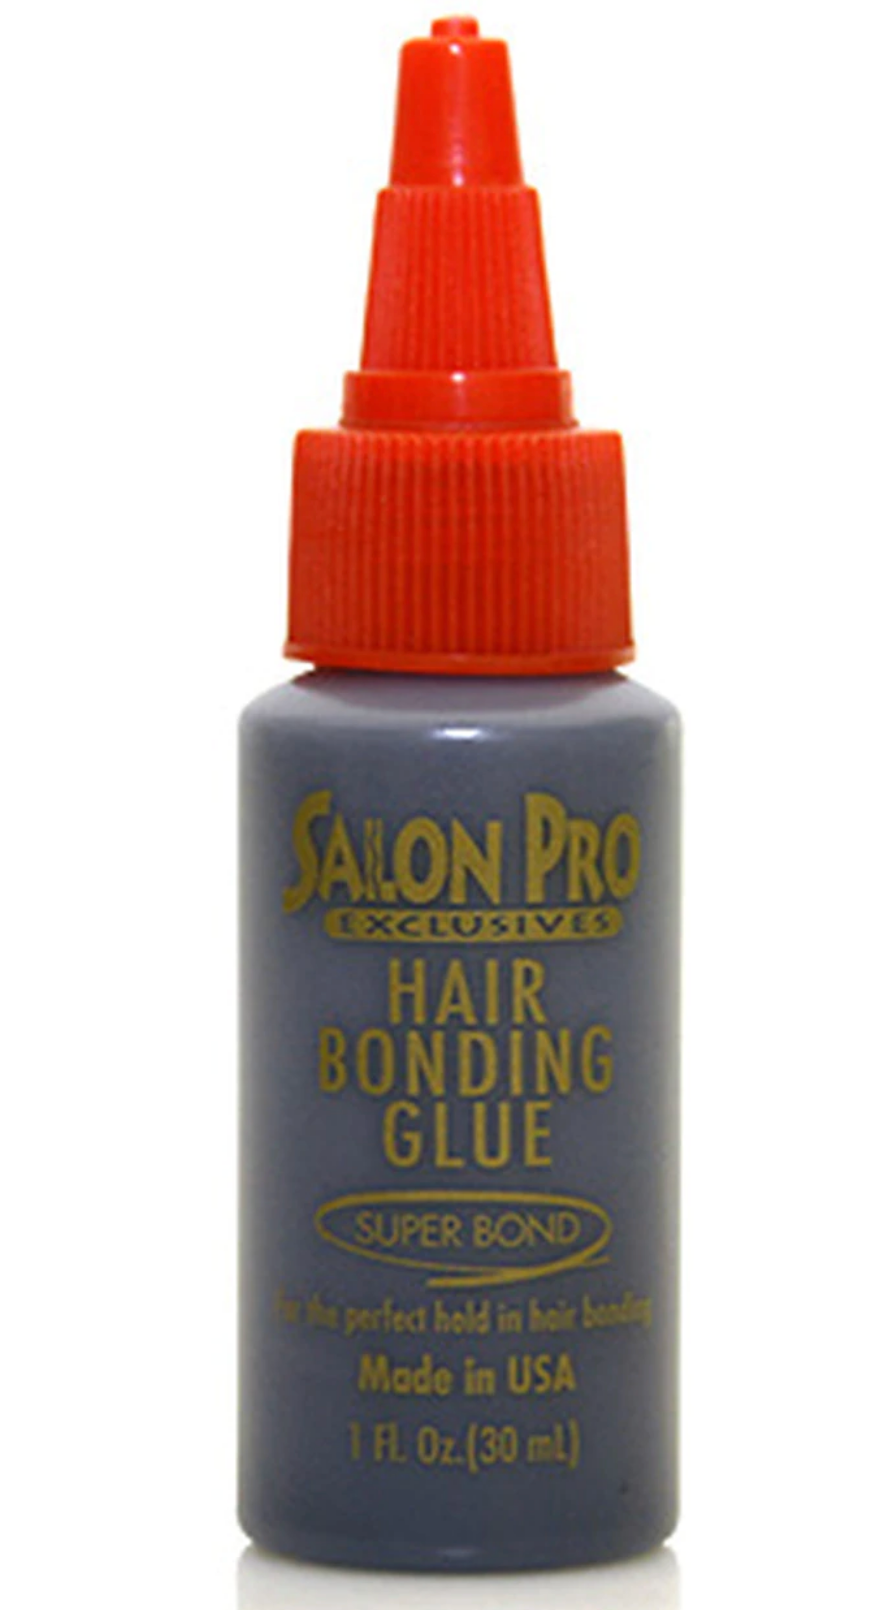 Salon Pro Super Bond Glue